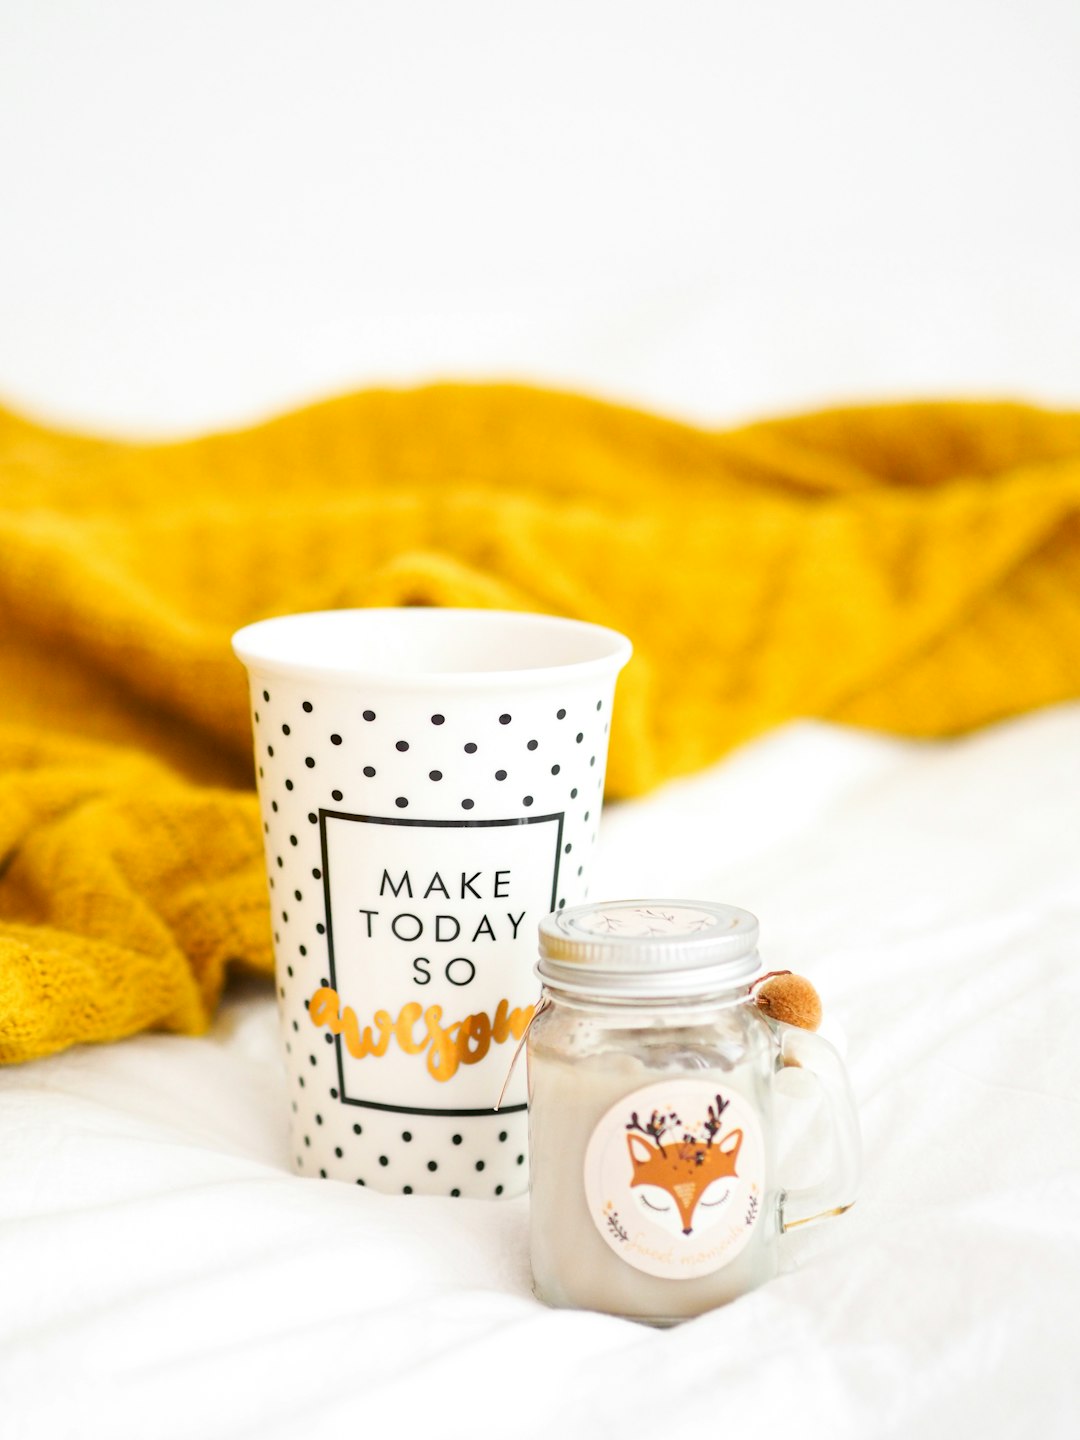 white and black polka dot ceramic mug beside clear glass jar with brown liquid inside